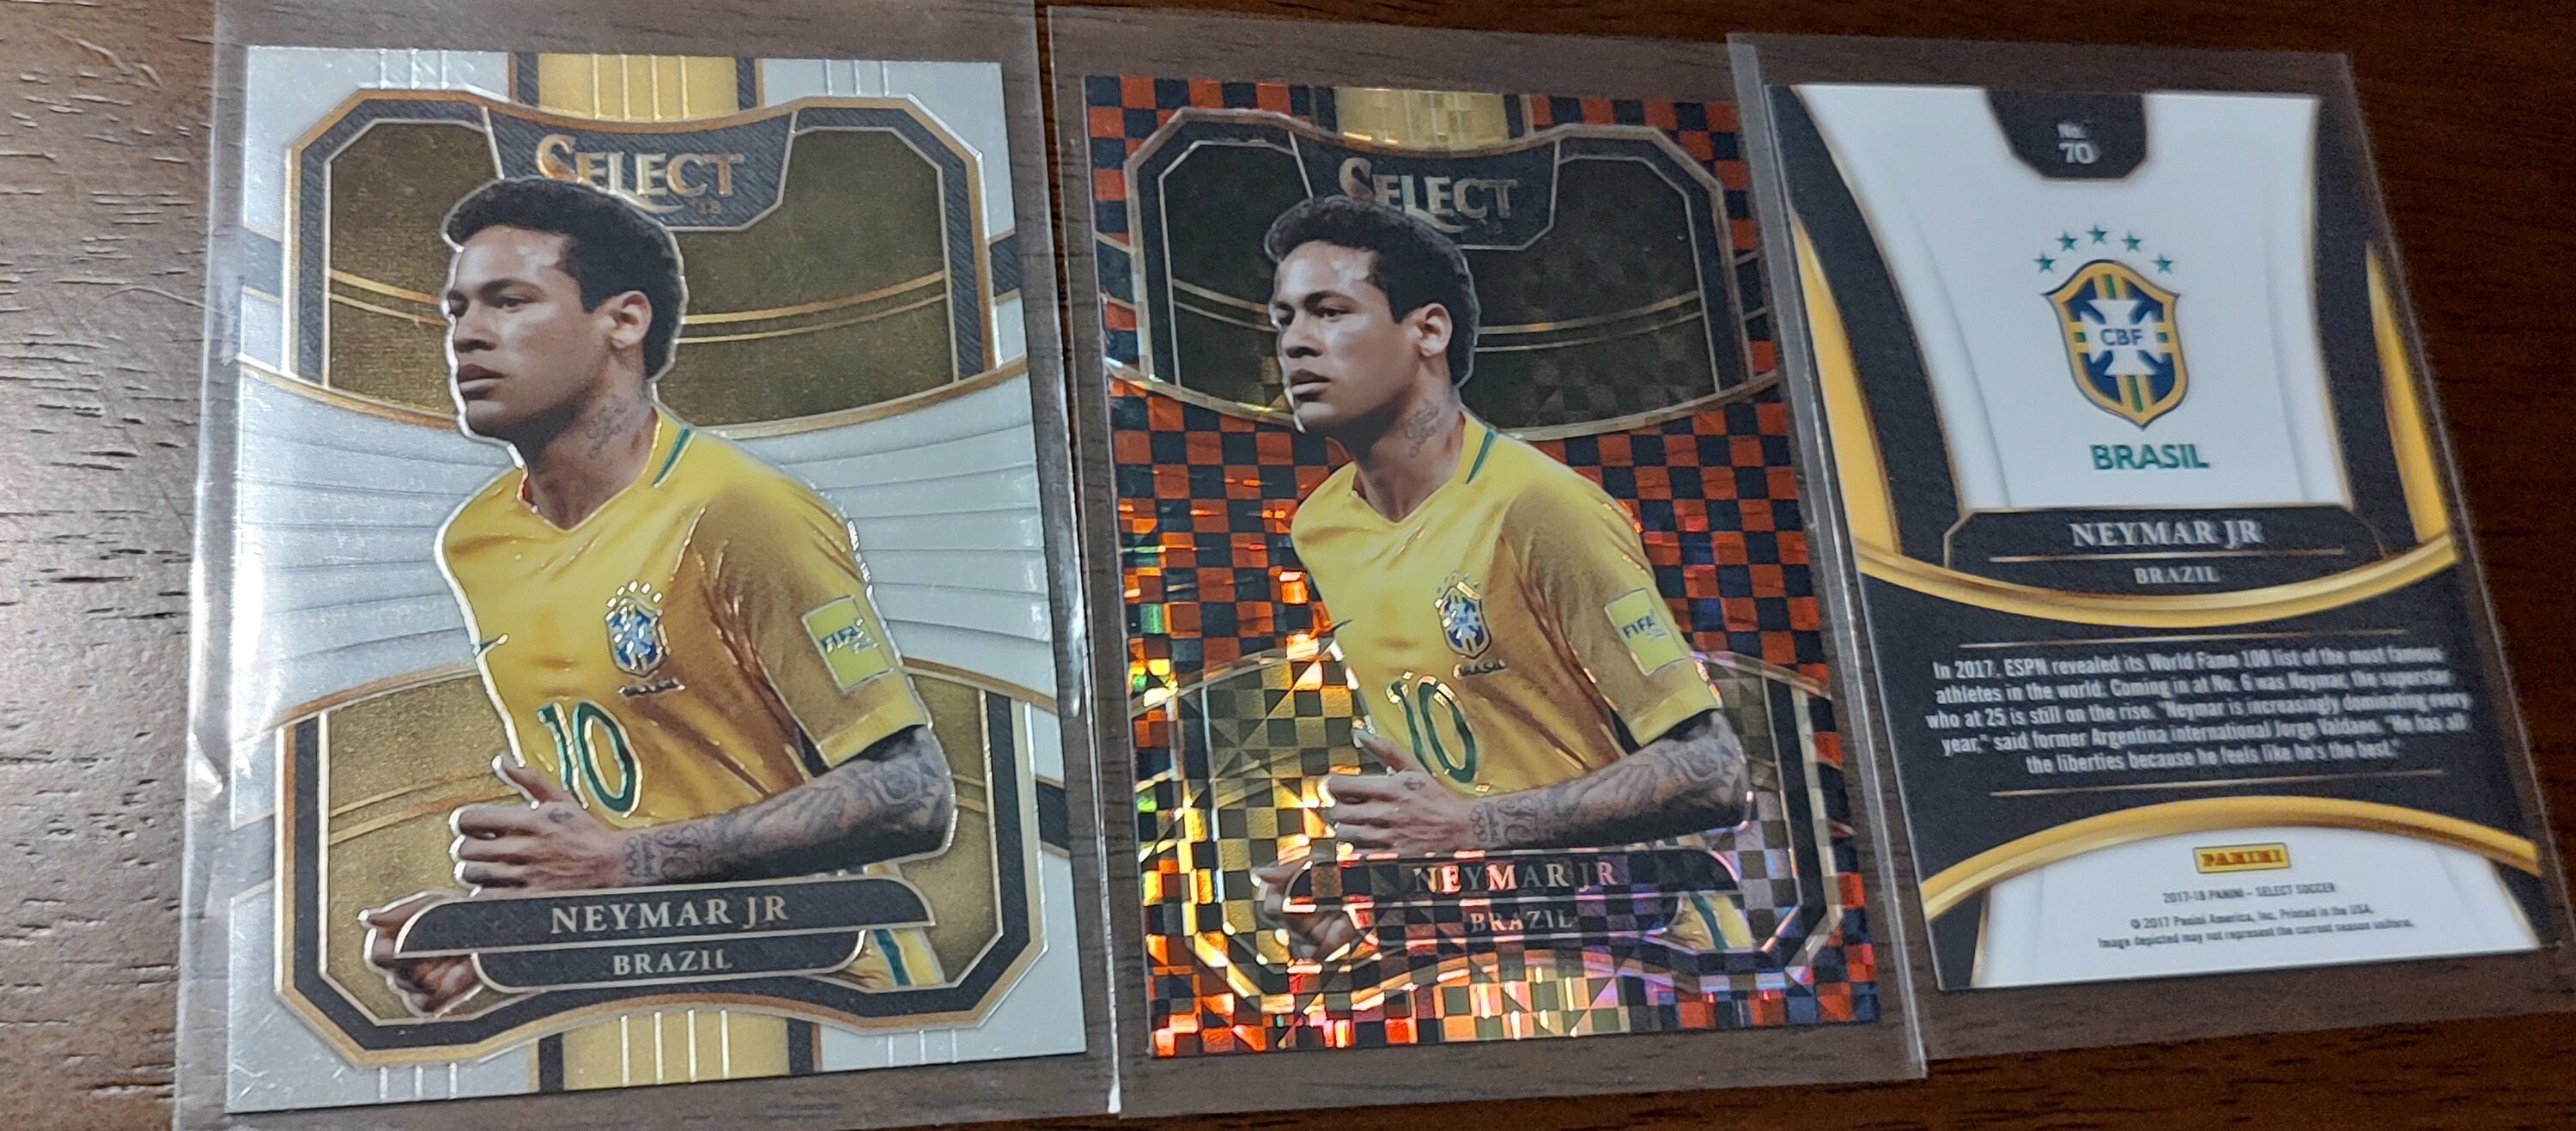 Rare '17-18 Panini Select Checkerboard Prizm #70 Neymar Jr Soccer card 2  bonus base cards Futbol Football Brazil Barcelona Santos Brasil